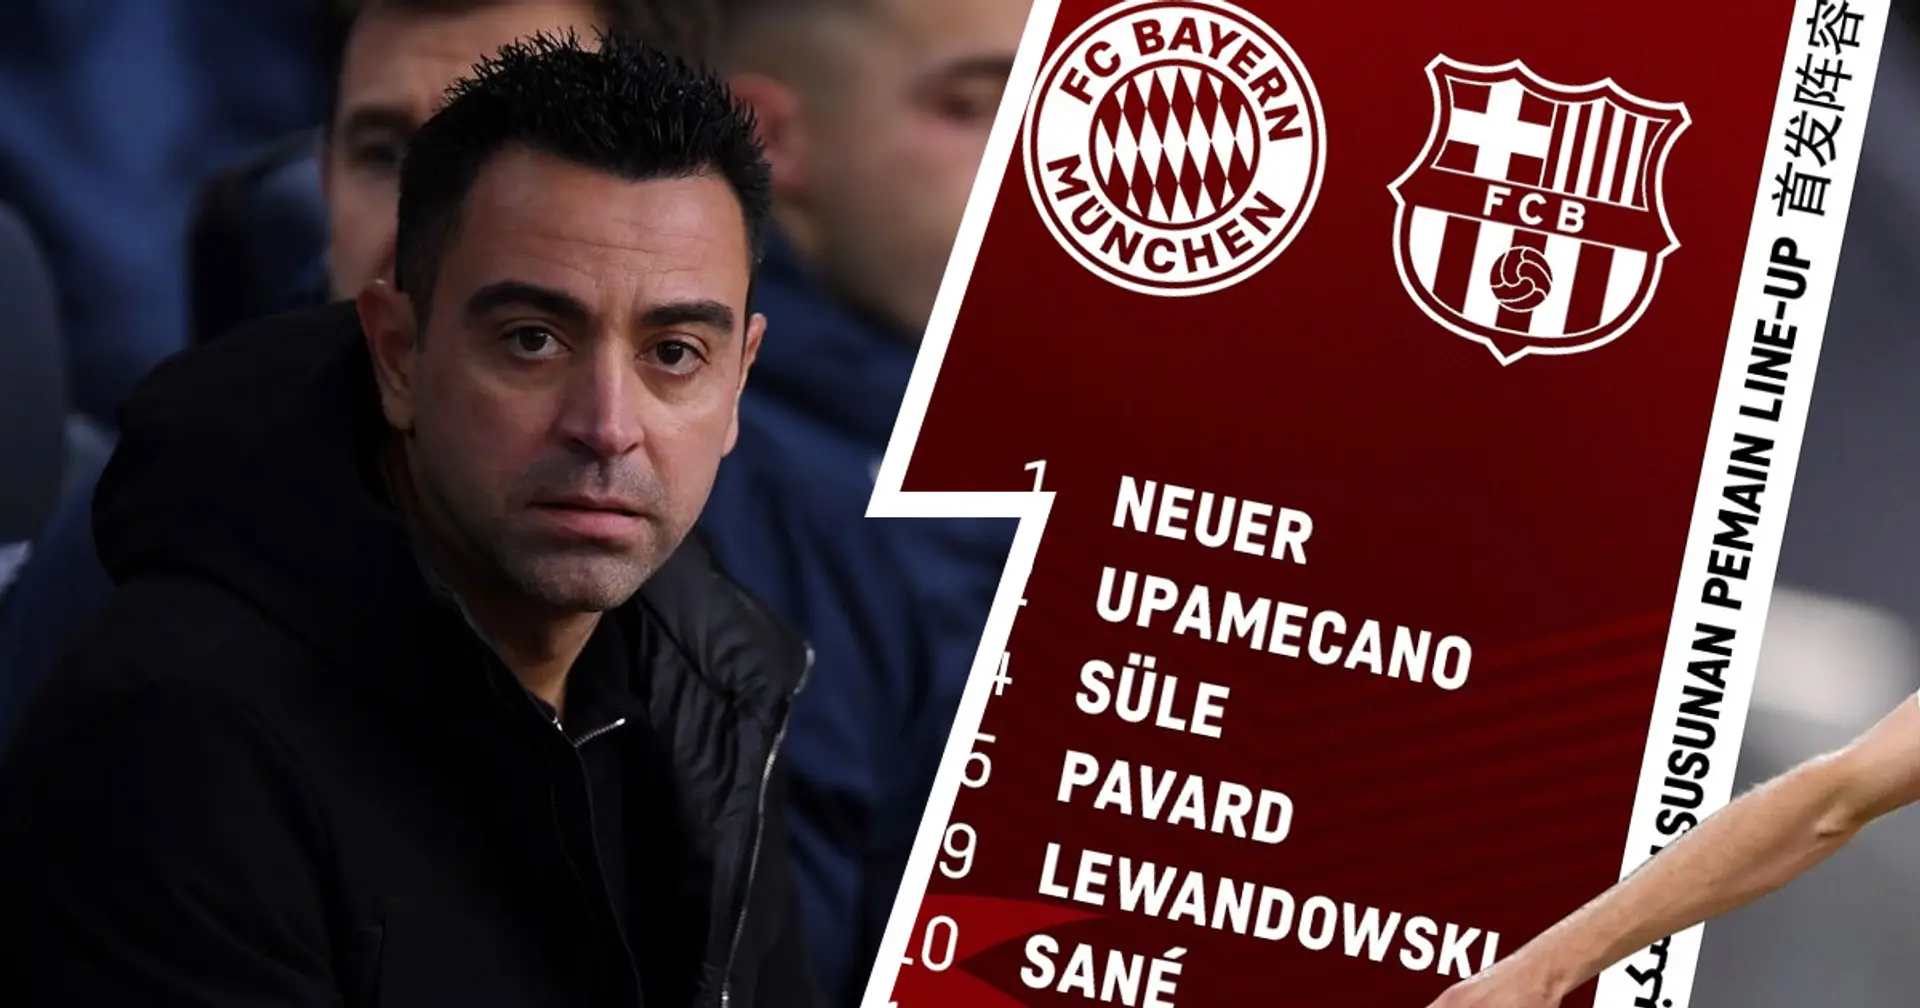 Lewandowski in, no Kimmich: Bayern XI vs Barca revealed